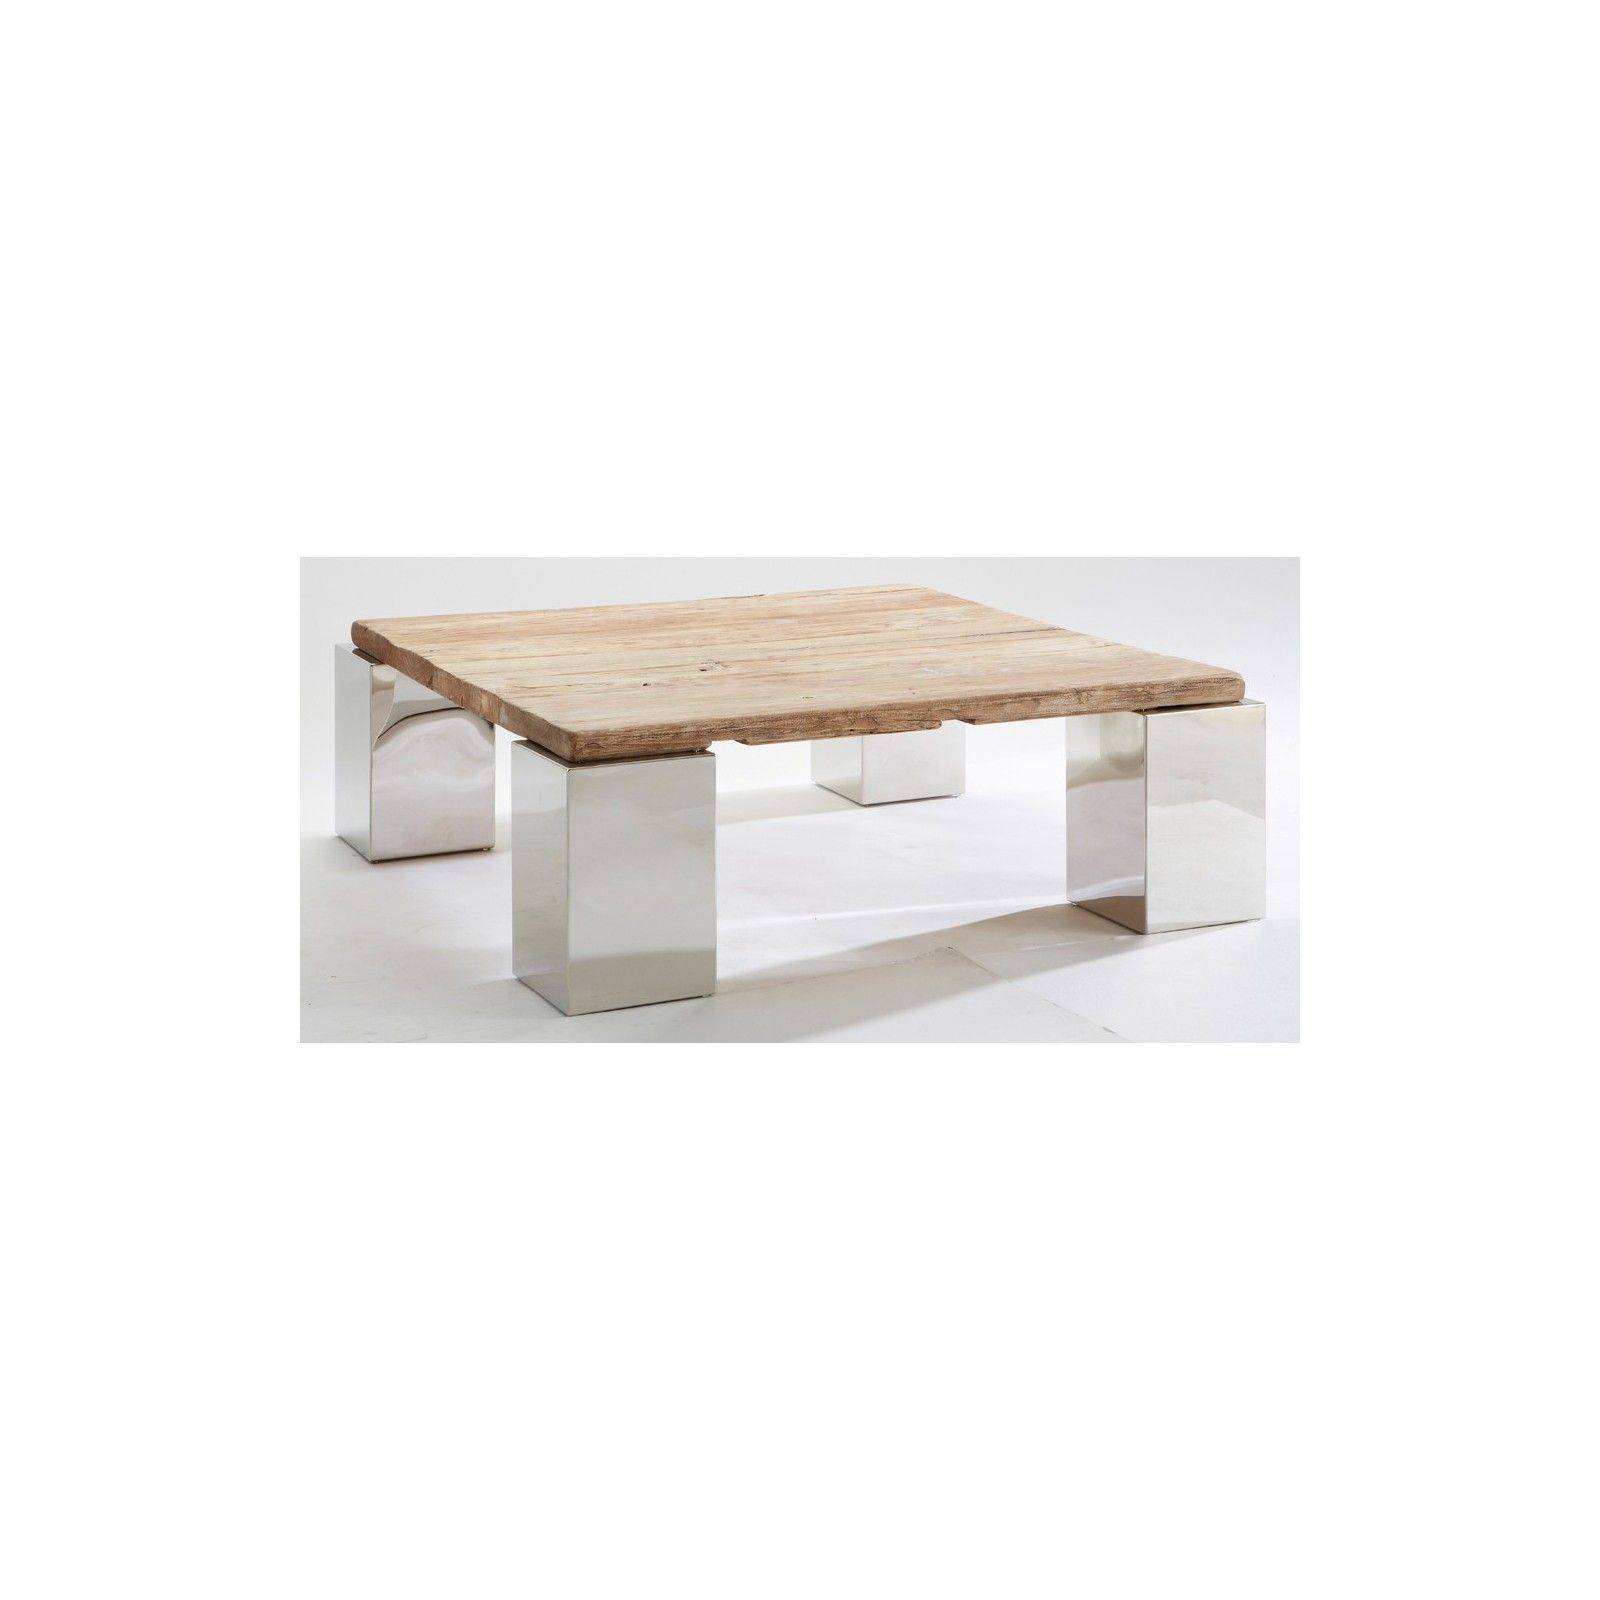 Table basse carrée en orme Stainless ethnique chic 100cm